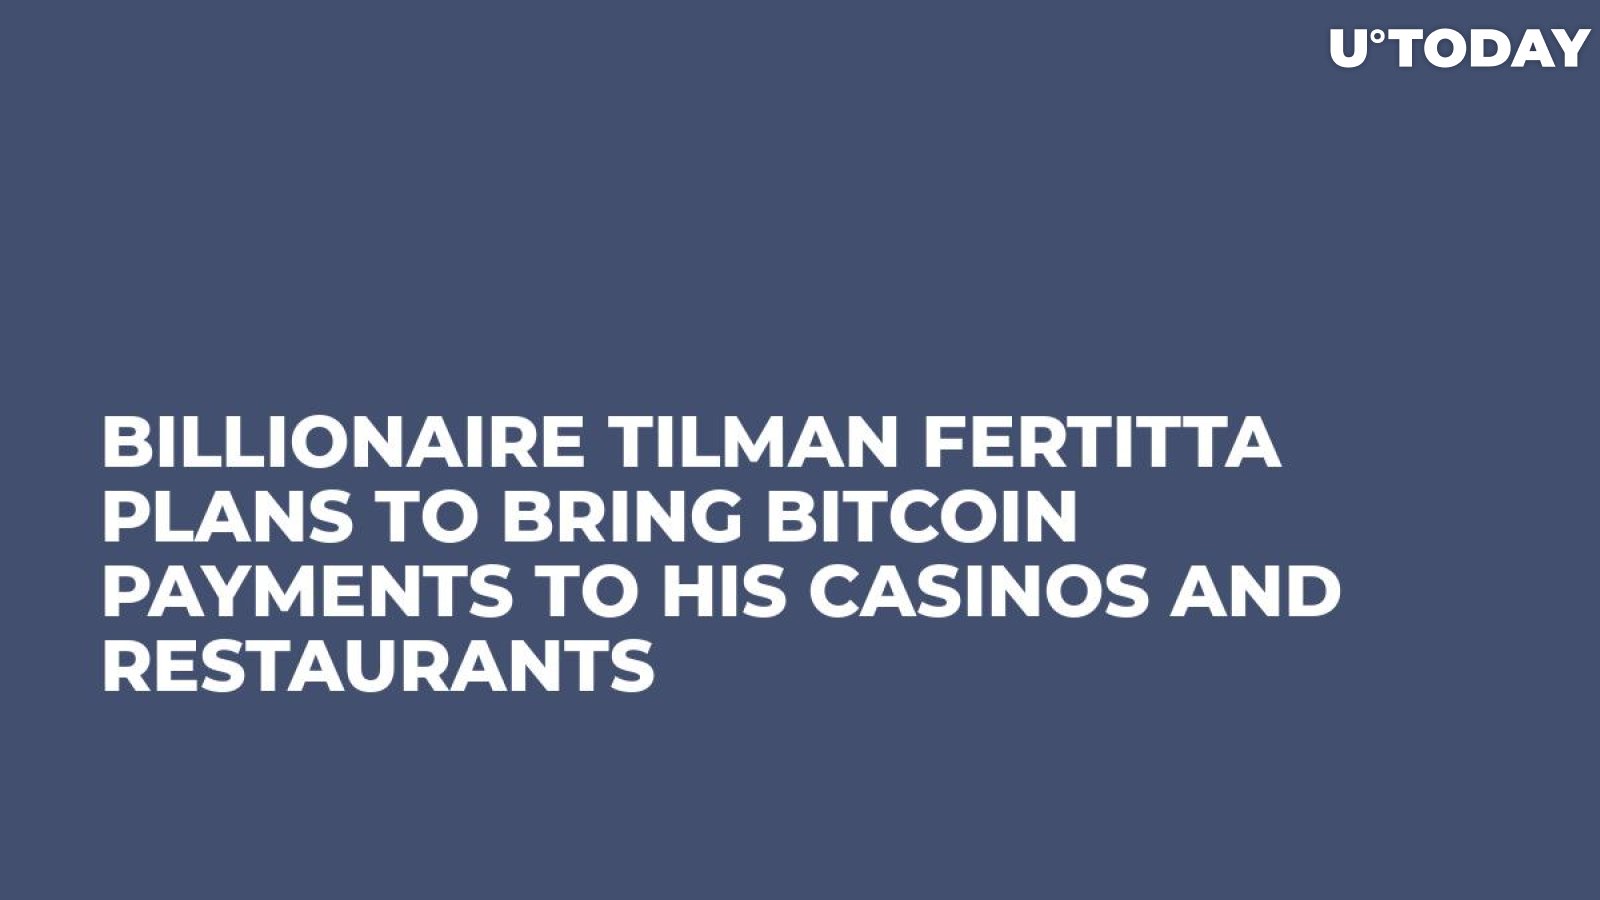 Billionaire Tilman Fertitta Plans to Bring Bitcoin Payments to His Casinos and Restaurants